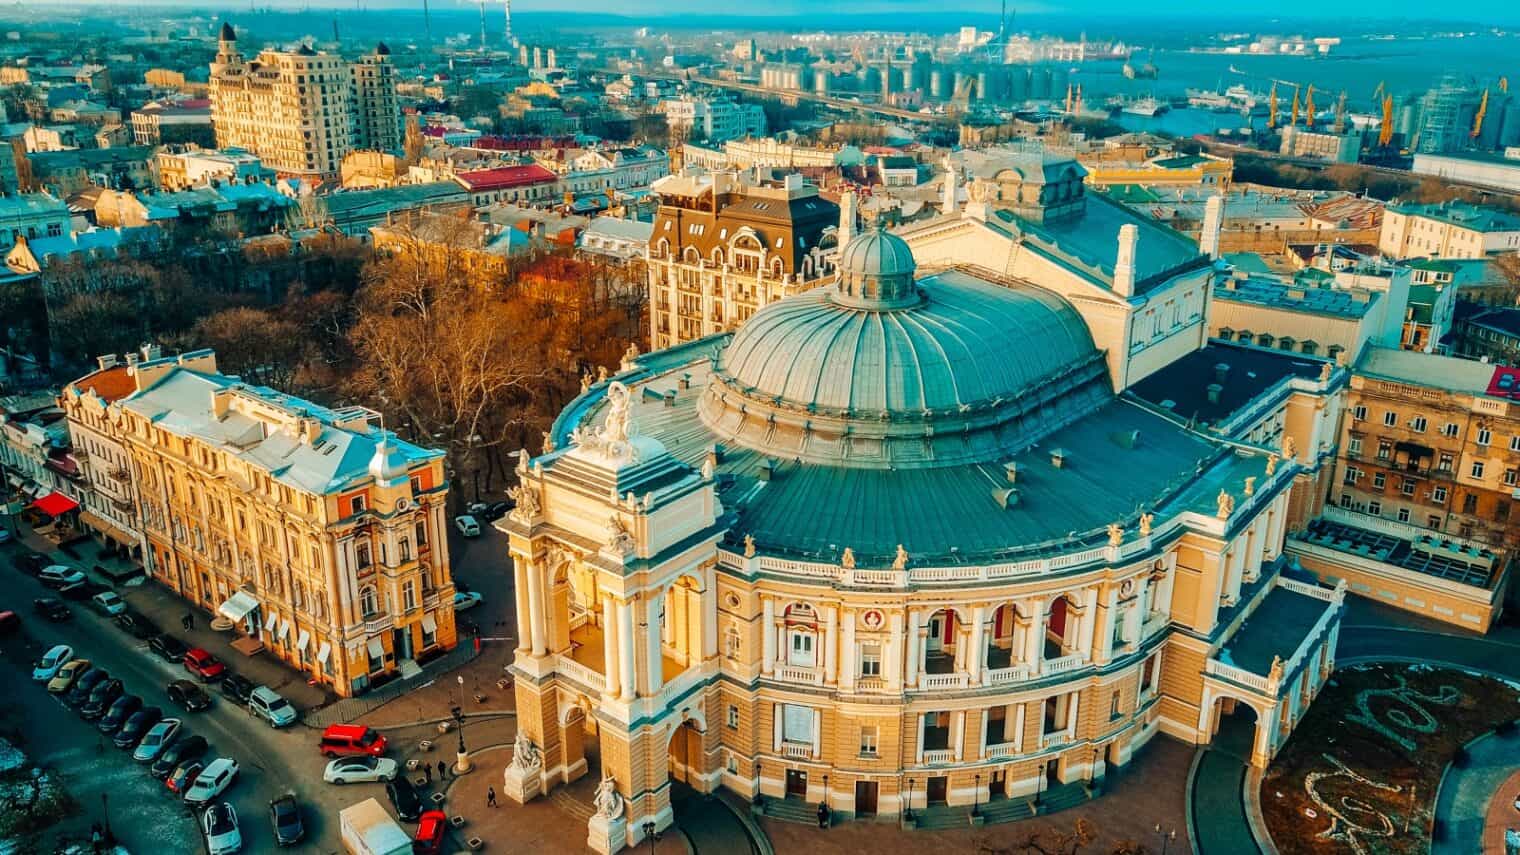 The roofs of Odessa. Photo by Hrecheniuk Oleksii via Shutterstock.com